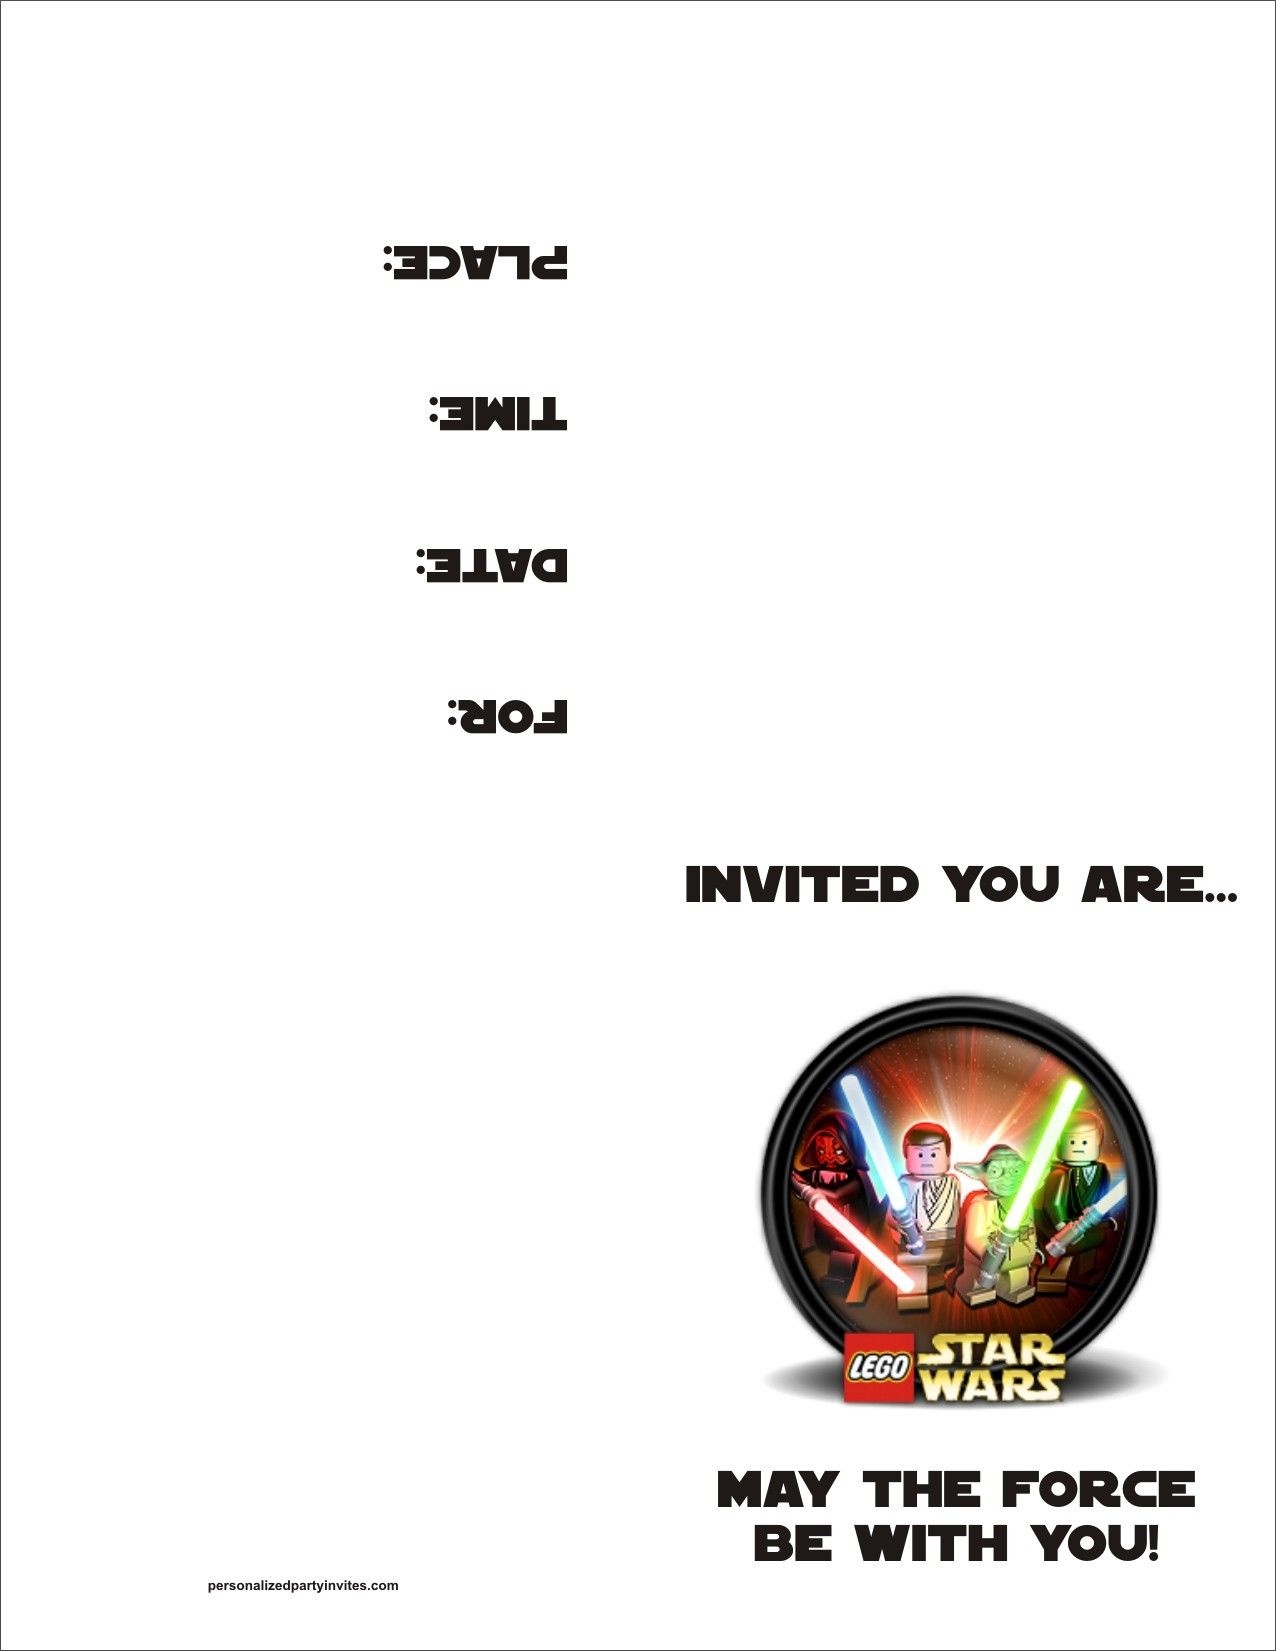 Lego+Star+Wars+Party+Invitations+Printable+Free | Costume In 2019 - Star Wars Invitations Free Printable